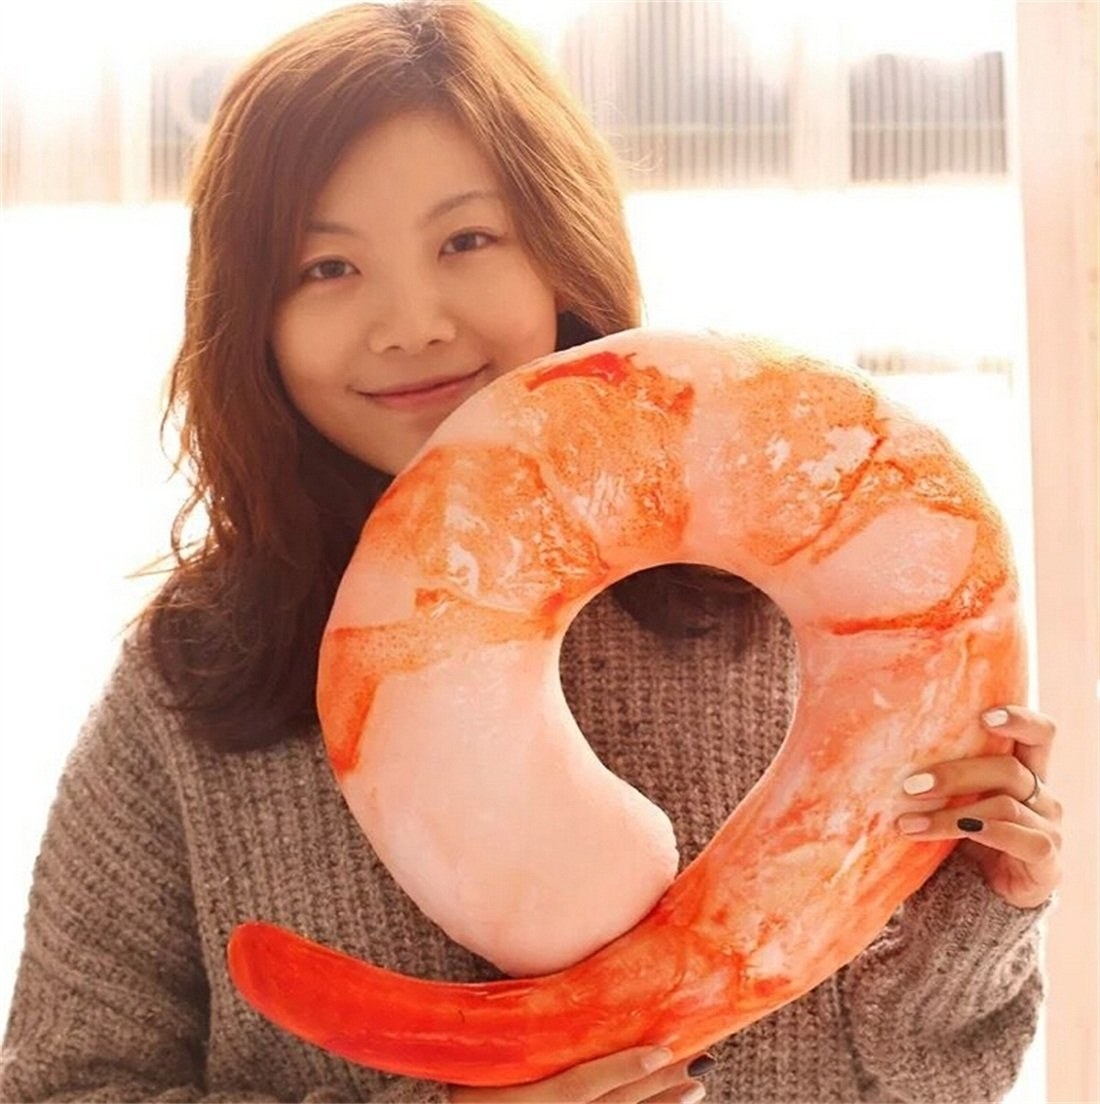 A model holding a shrimp pillow